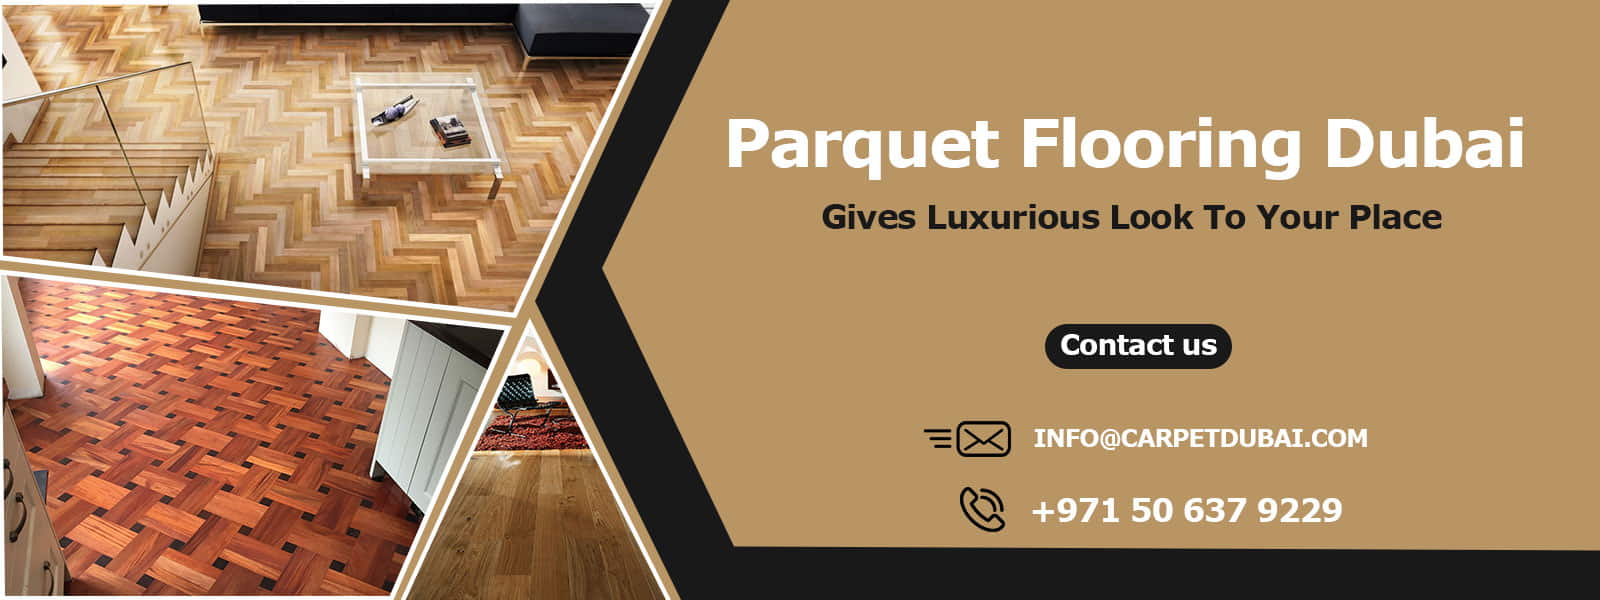 Parquet-Flooring-Dubai banner